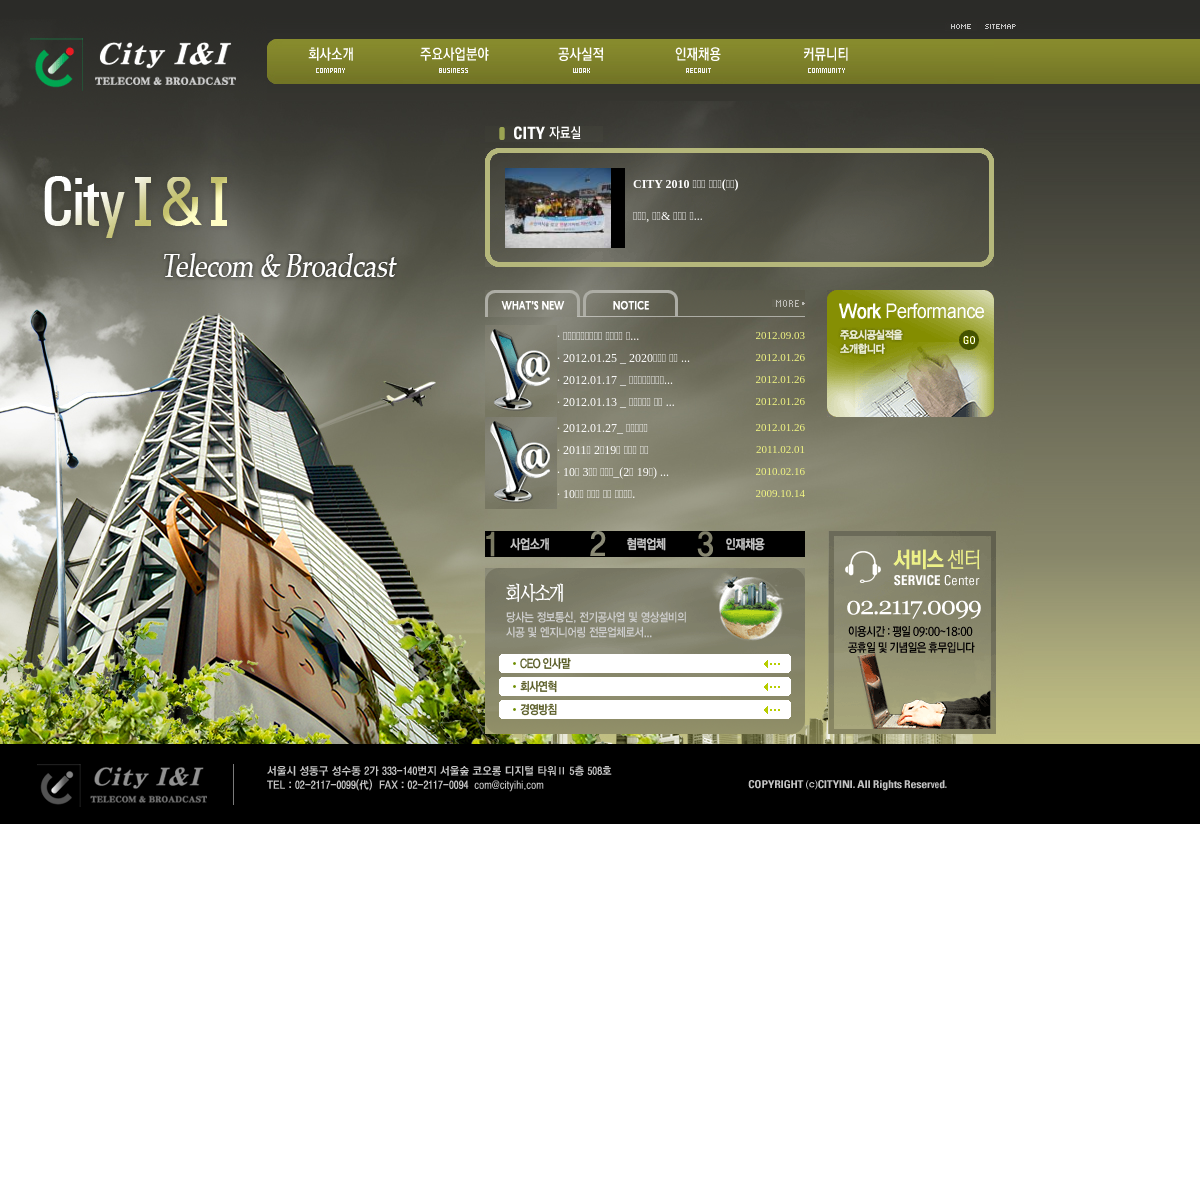 A complete backup of cityini.com